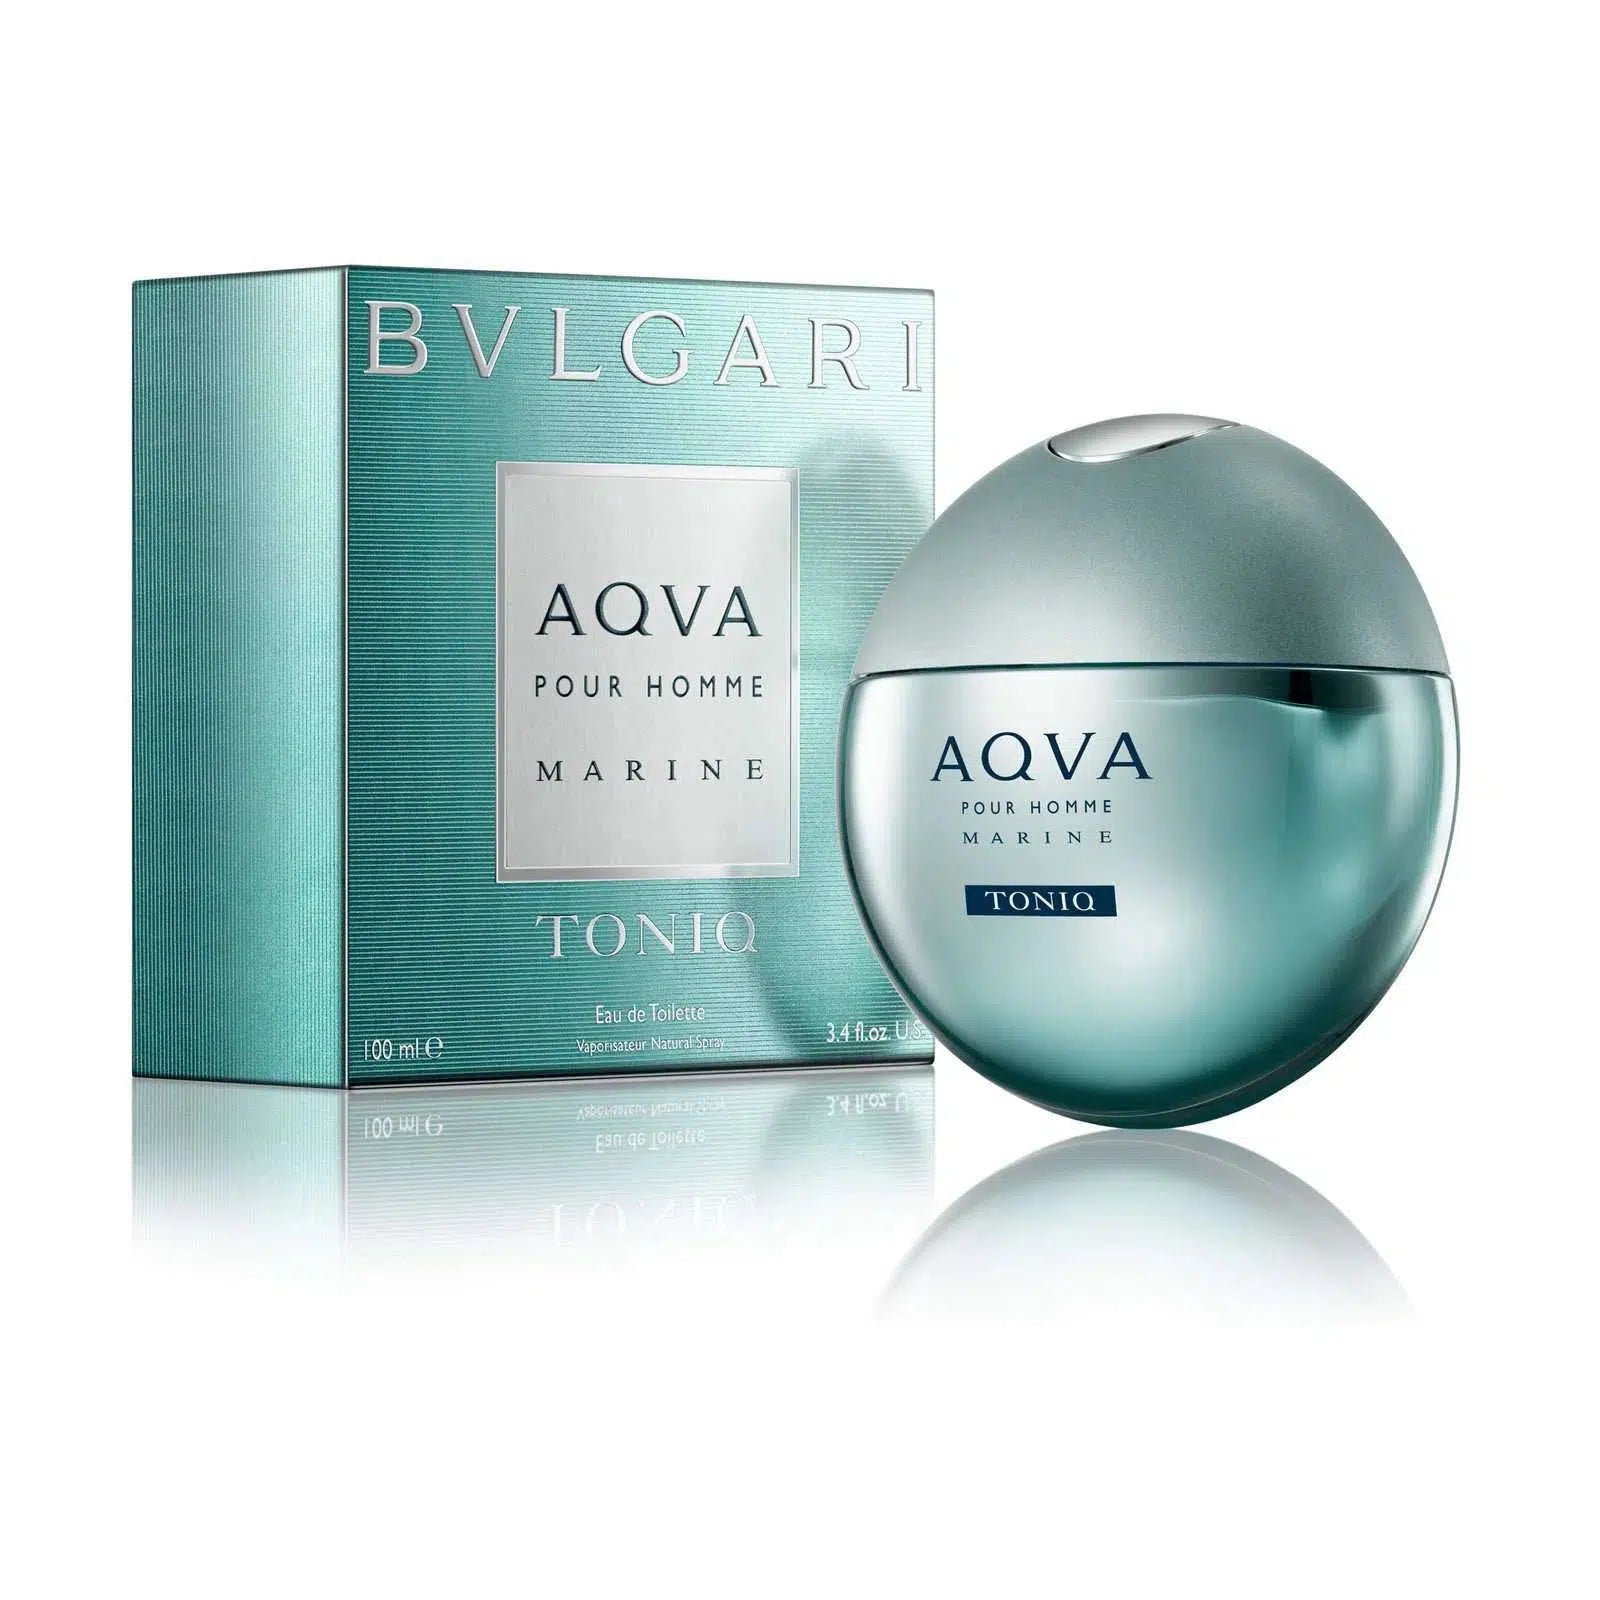 Bvlgari Aqua Marine Toniq 100ml - Perfume Philippines